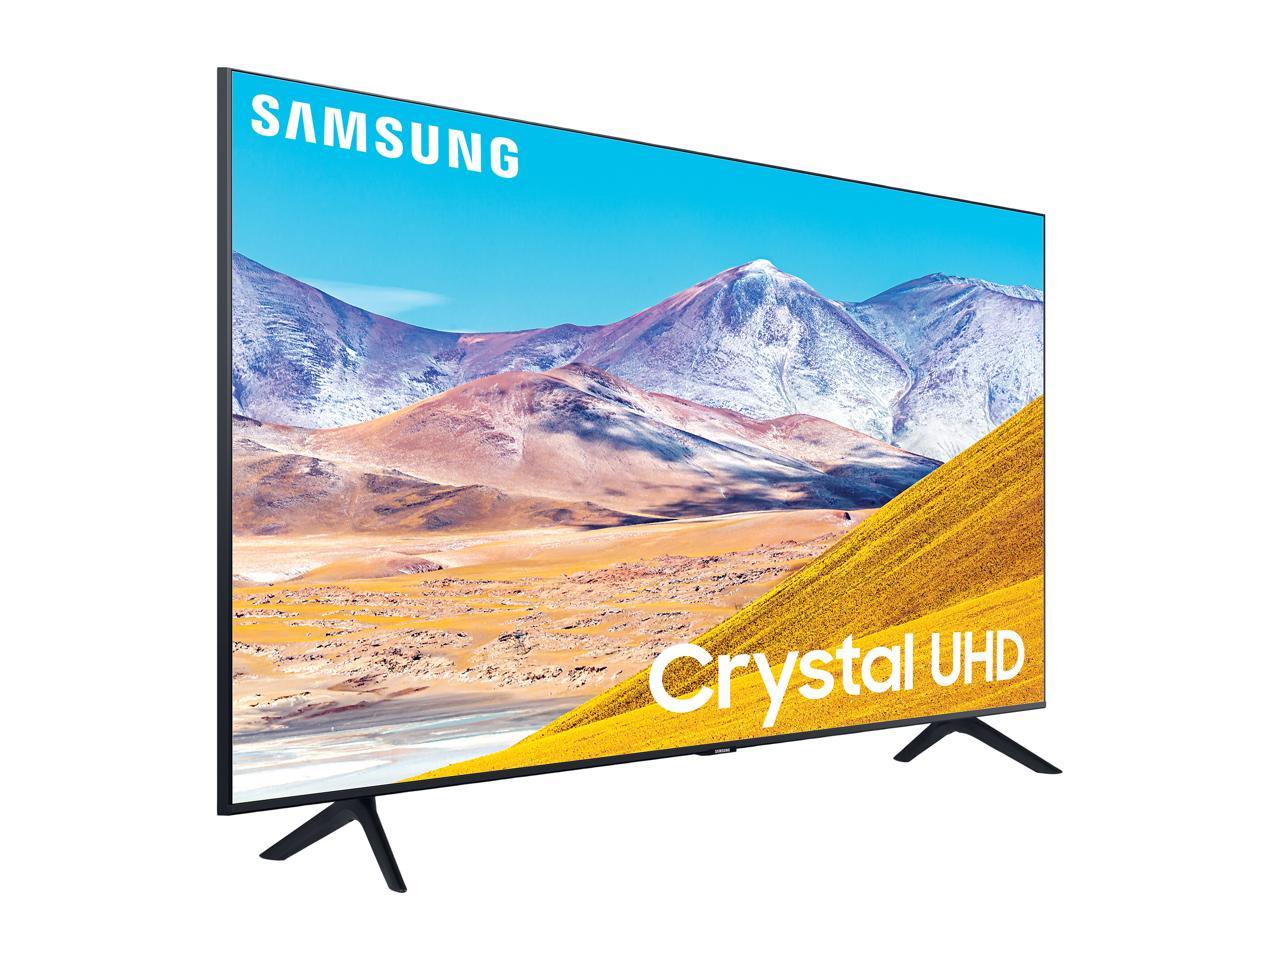 Samsung 55" Class TU8000 Series Crystal UHD 4K Smart TV (UN55TU8000FXZA, 2020 Mo 887276397719 eBay